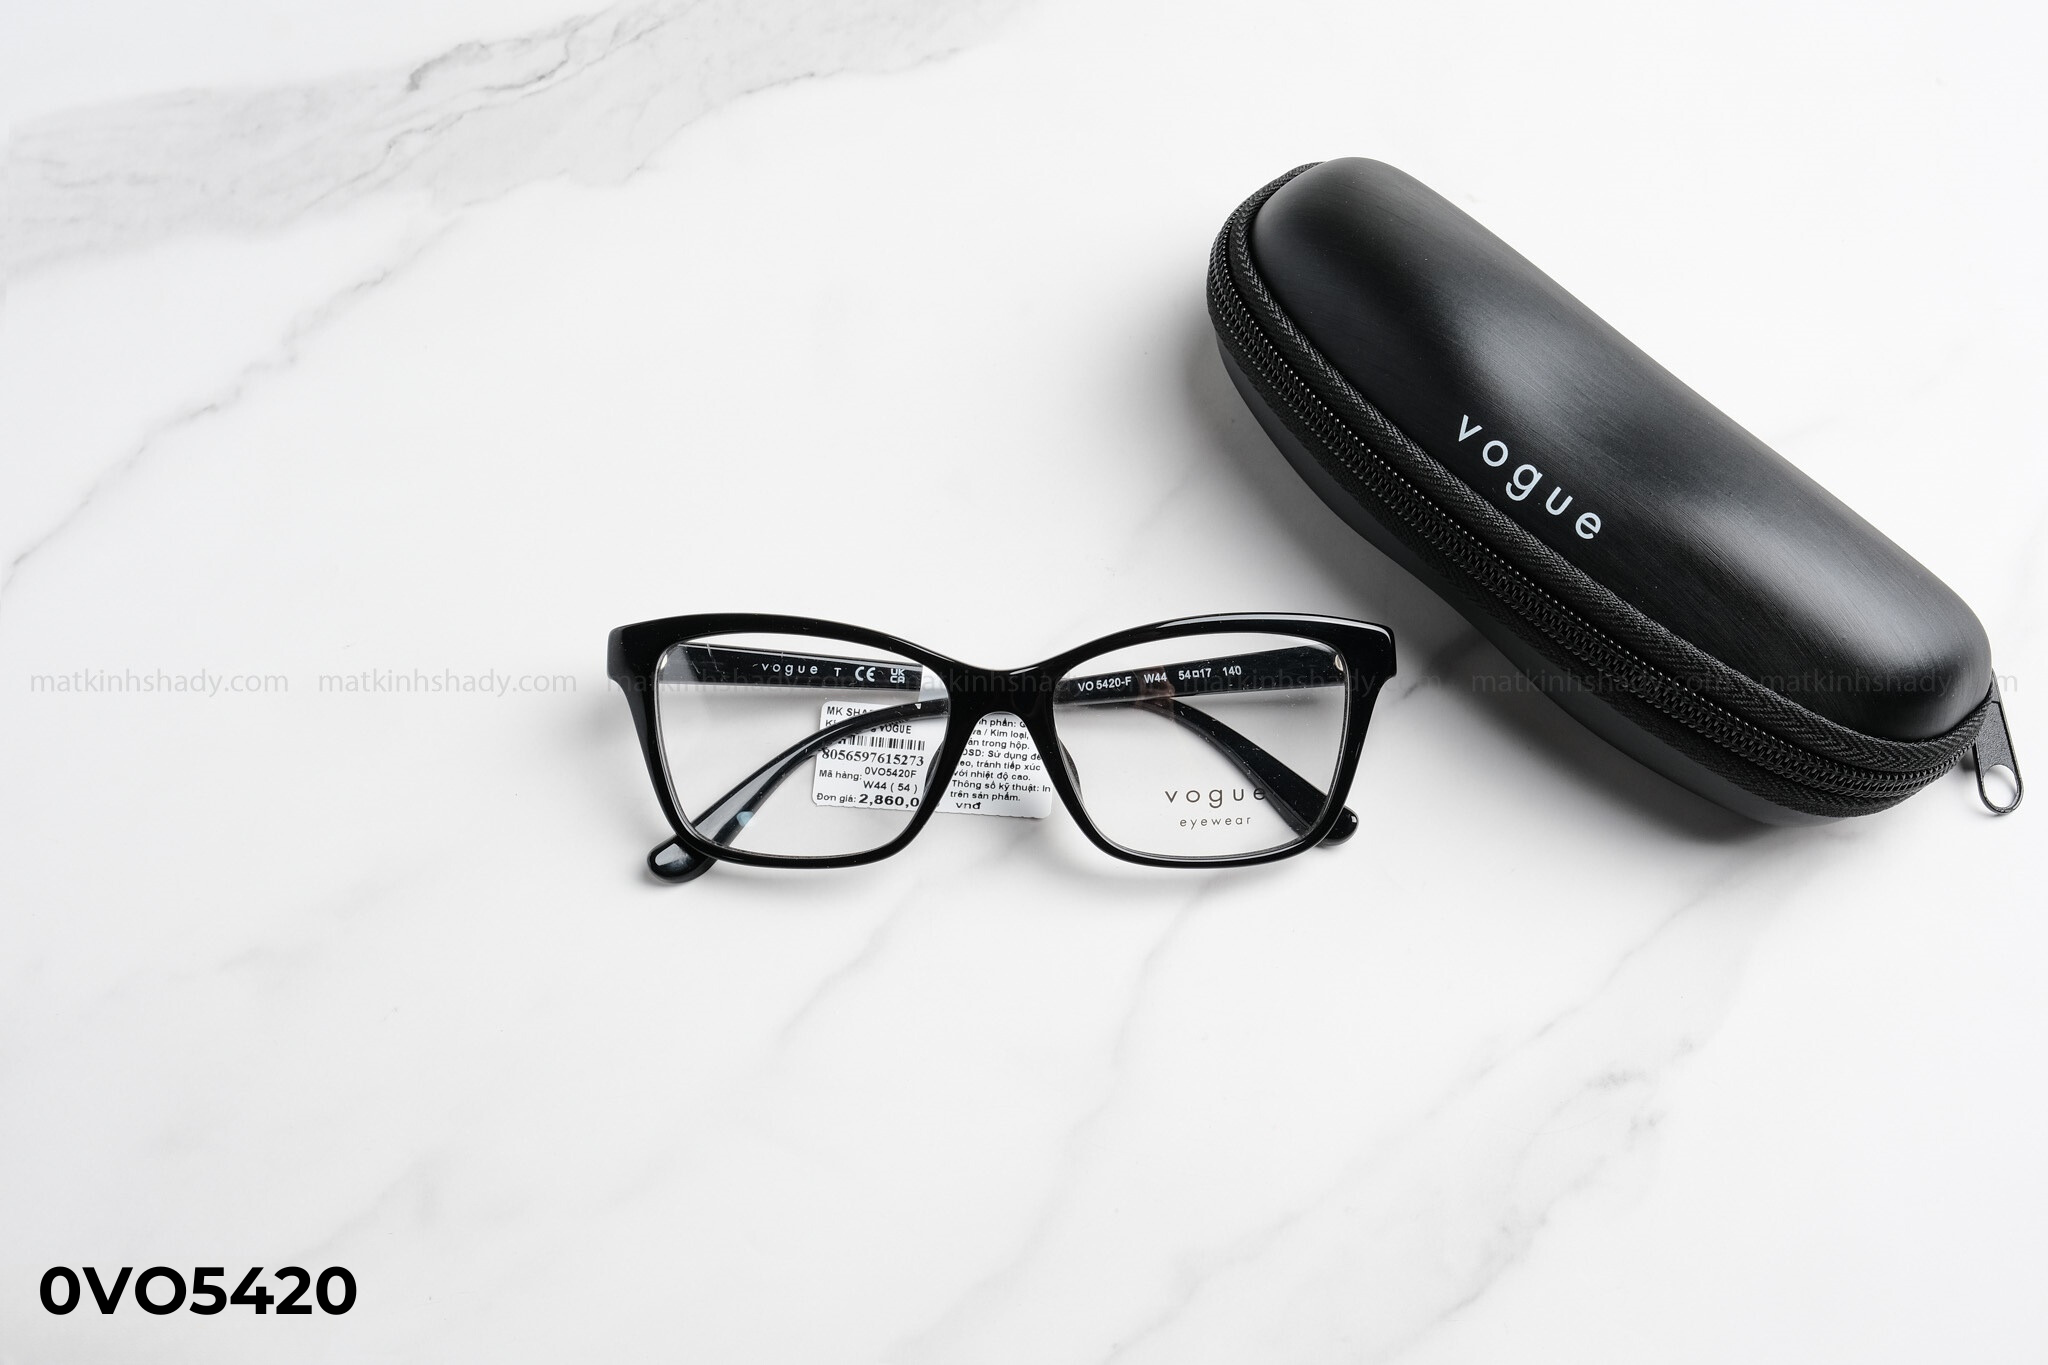  Vogue Eyewear - Glasses - 0VO5420 